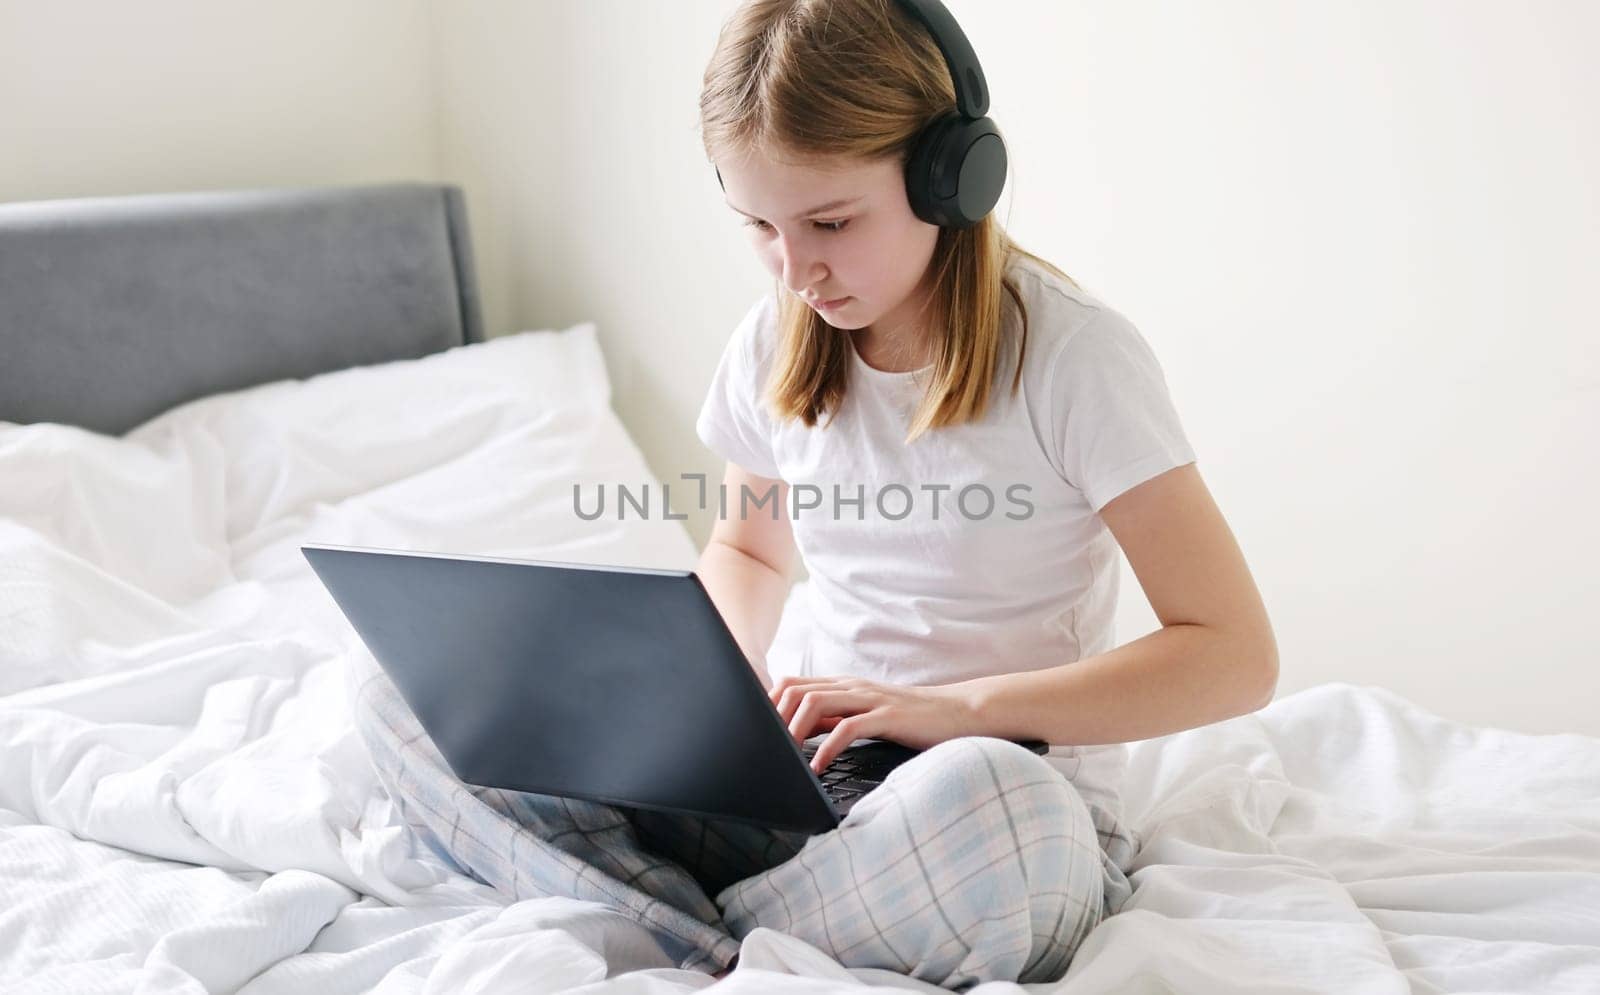 Focused Little Girl Doing Her Homework On The Internet On Big Bed In The Morning by GekaSkr